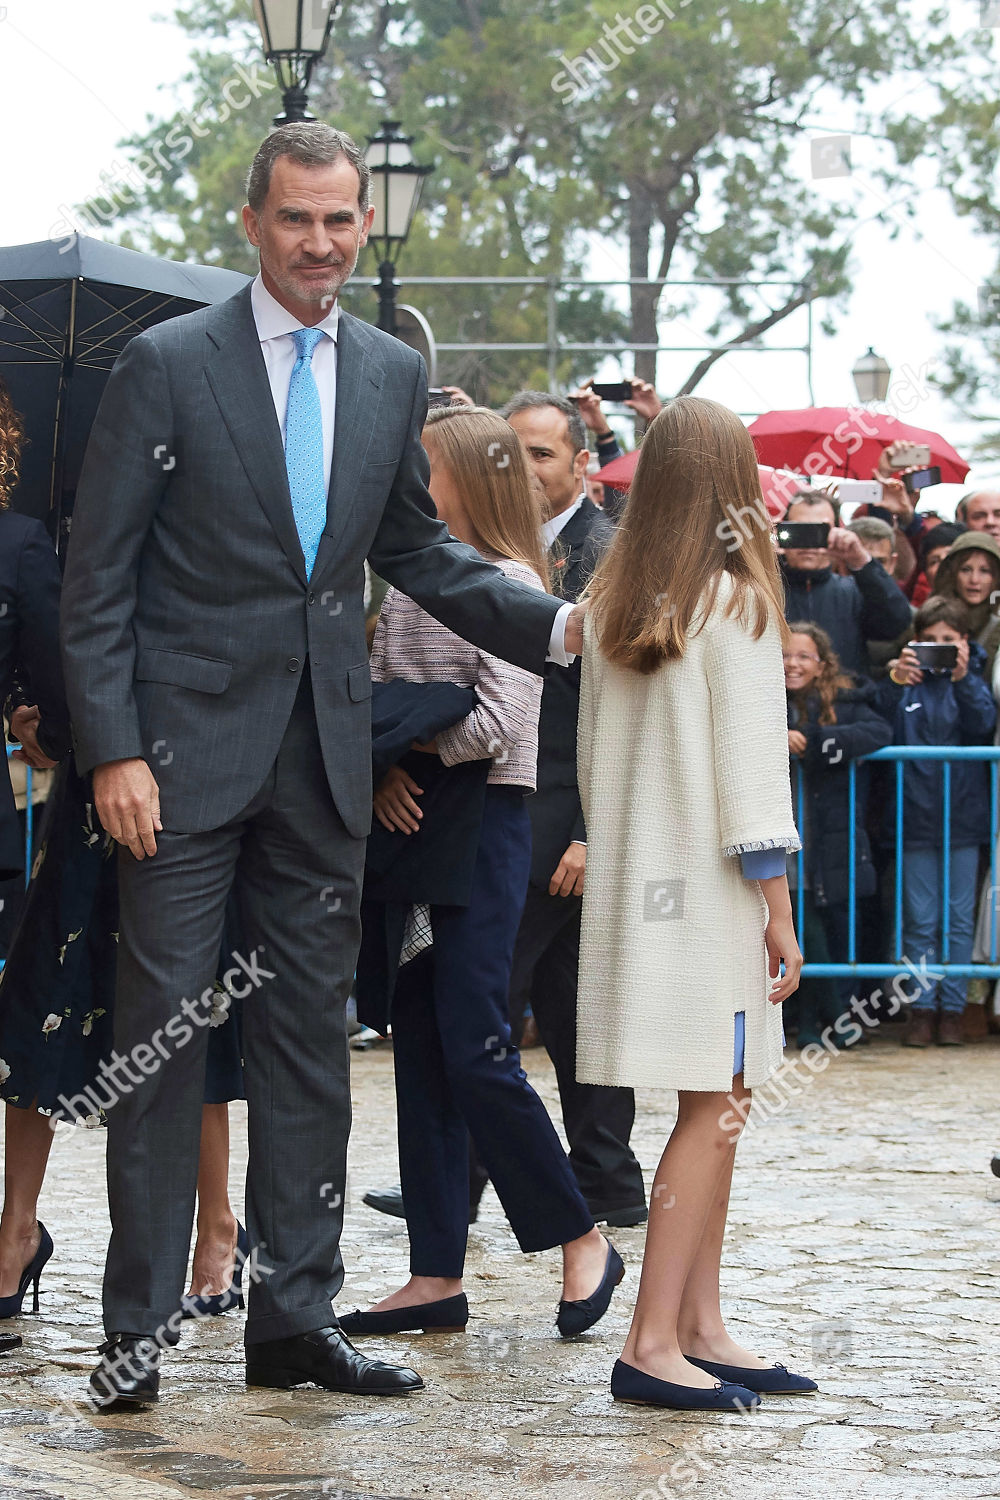 royal-family-attends-mass-in-majorca-palma-de-mallorca-spain-shutterstock-editorial-10215609bd.jpg